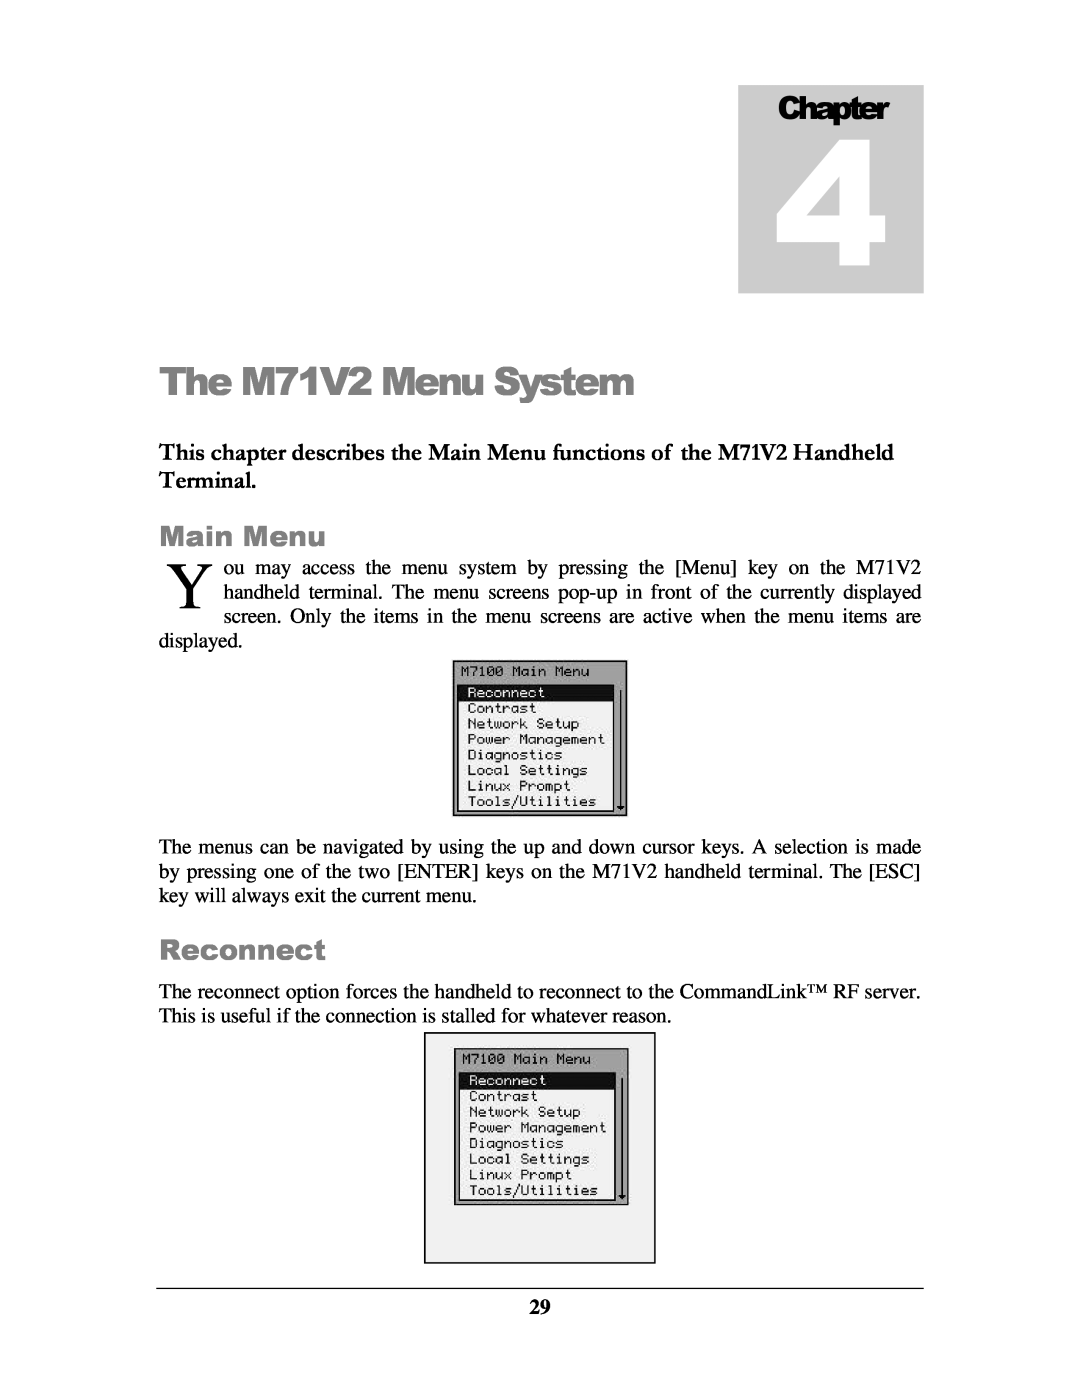 IBM manual The M71V2 Menu System, Main Menu, Reconnect, Chapter 